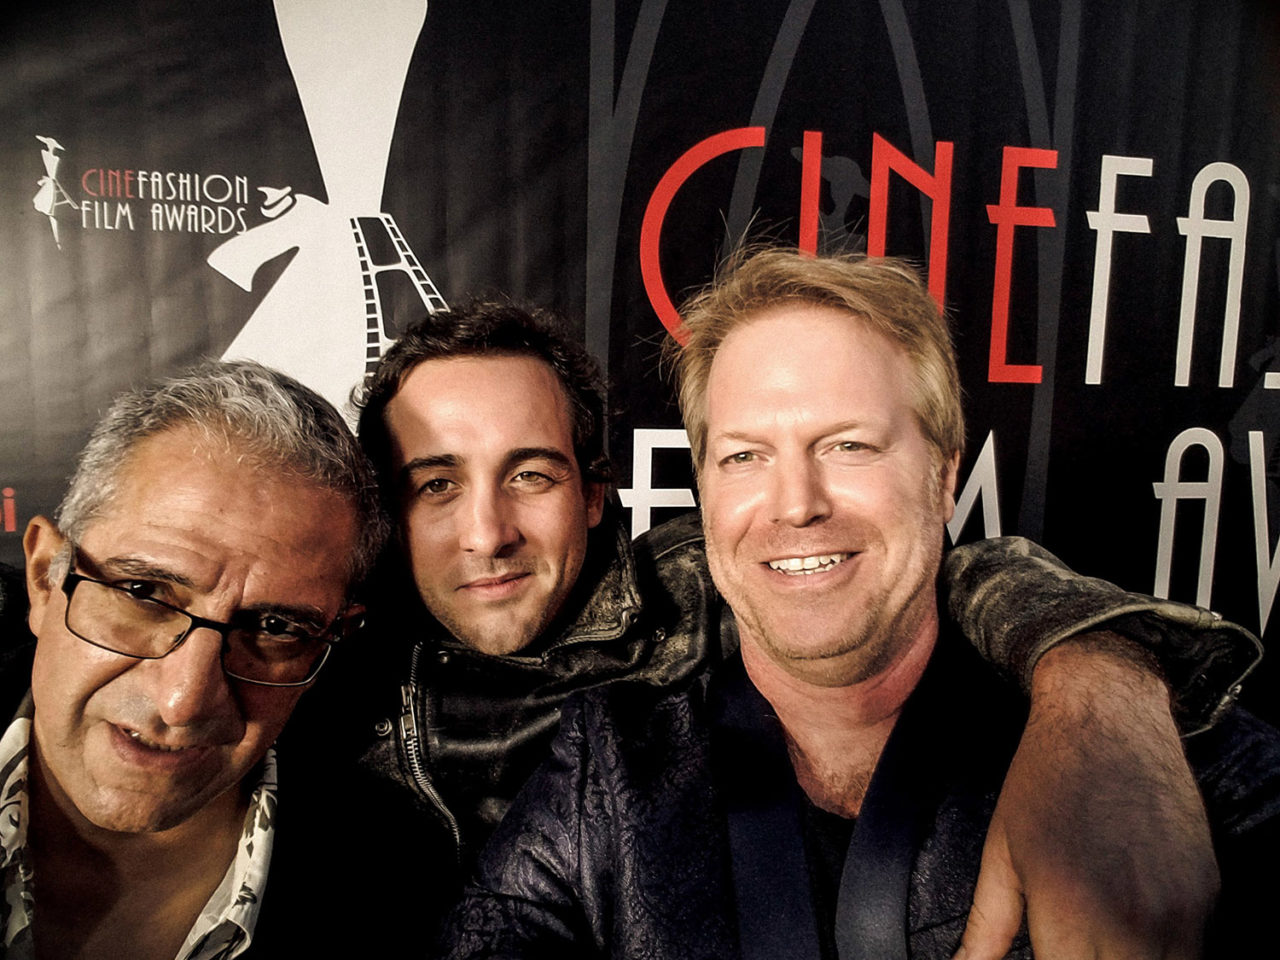 cinefashion film awards greg mcdonald director